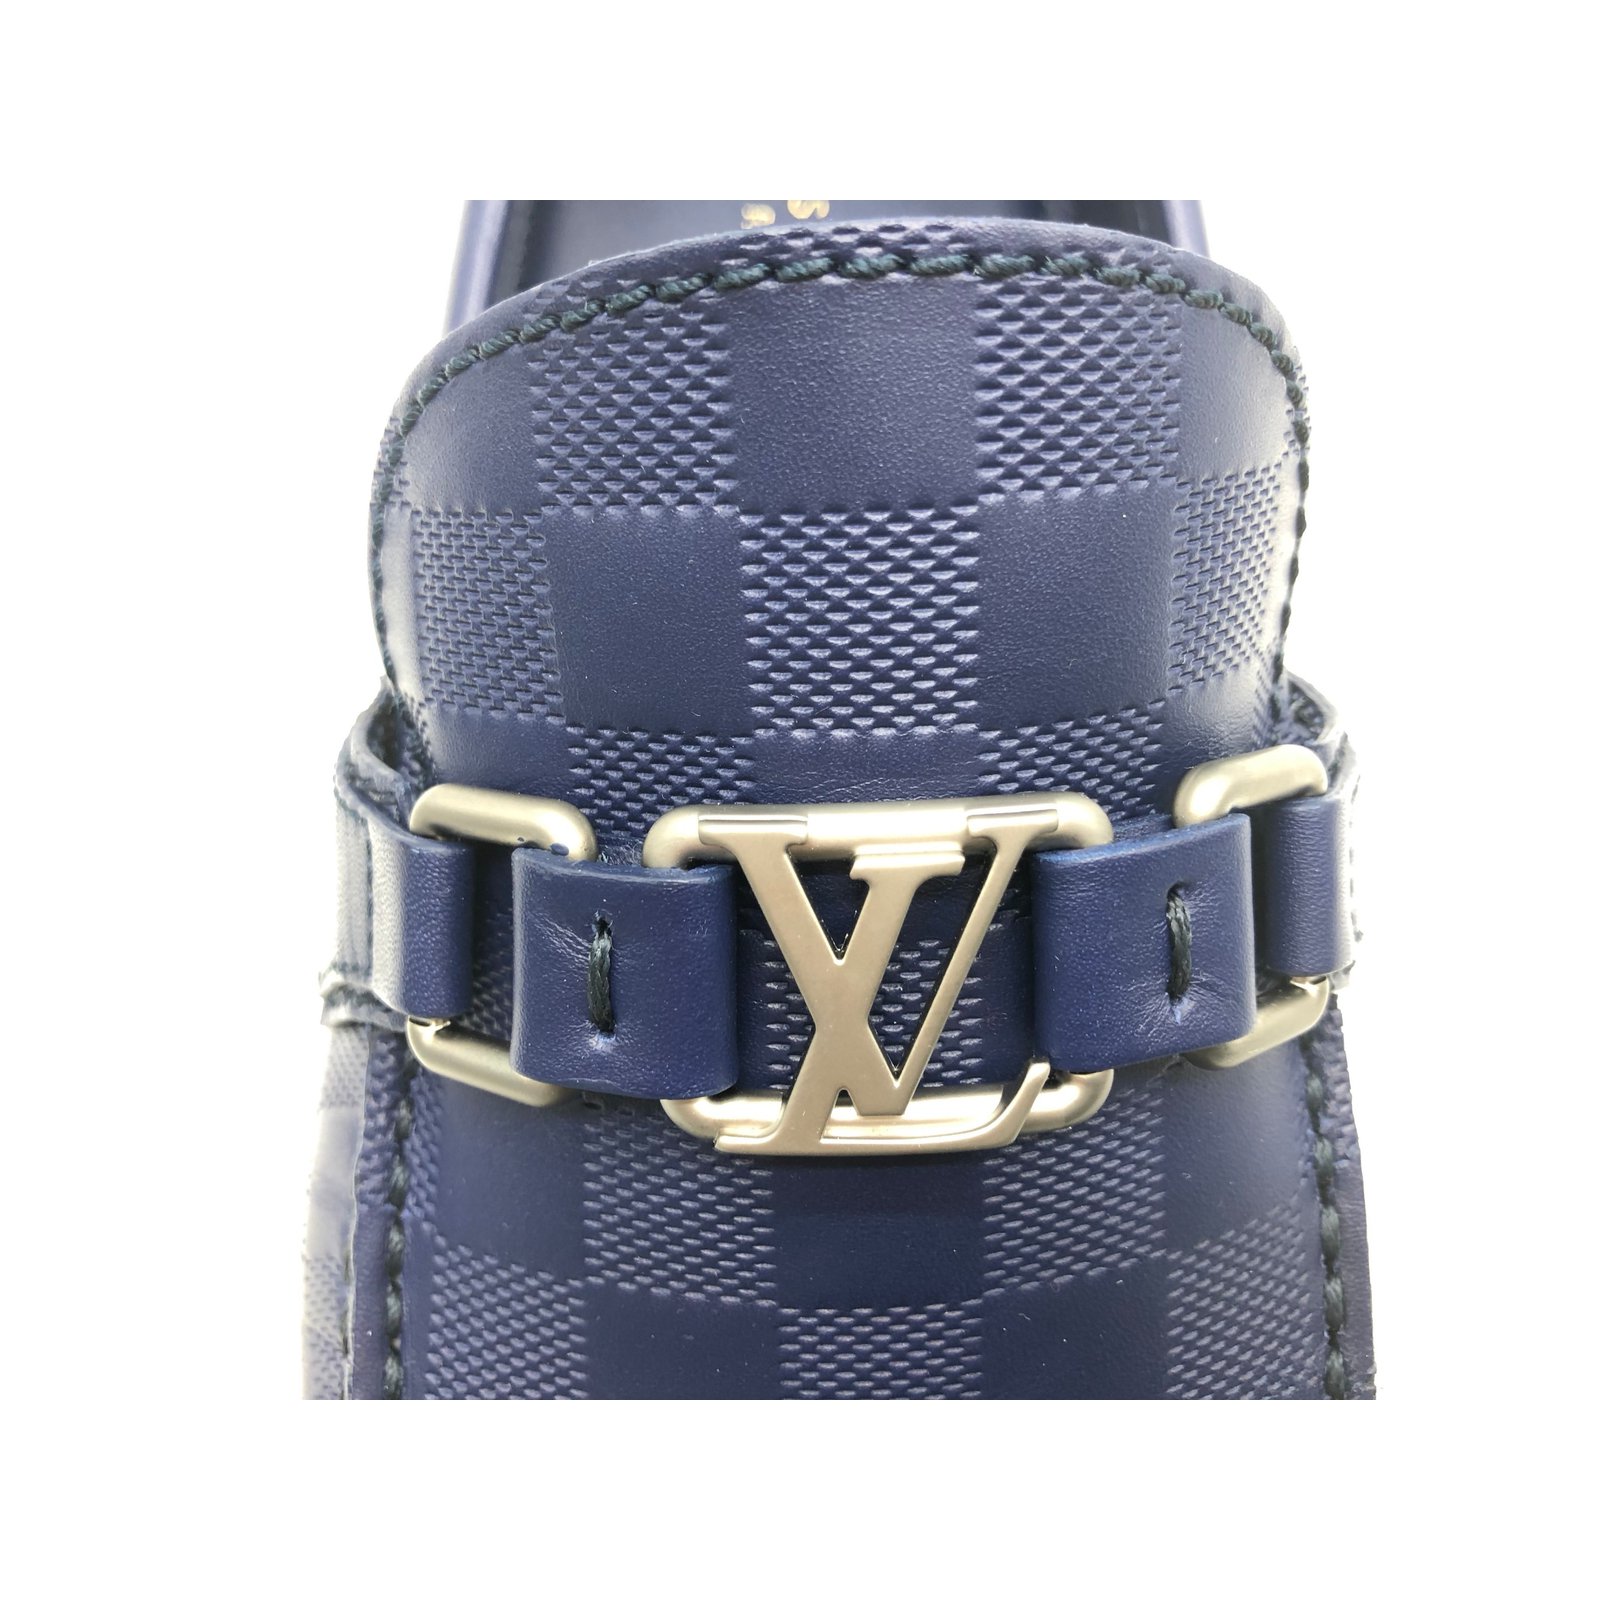 Louis Vuitton Hockenheim model moccasins in navy checkered leather